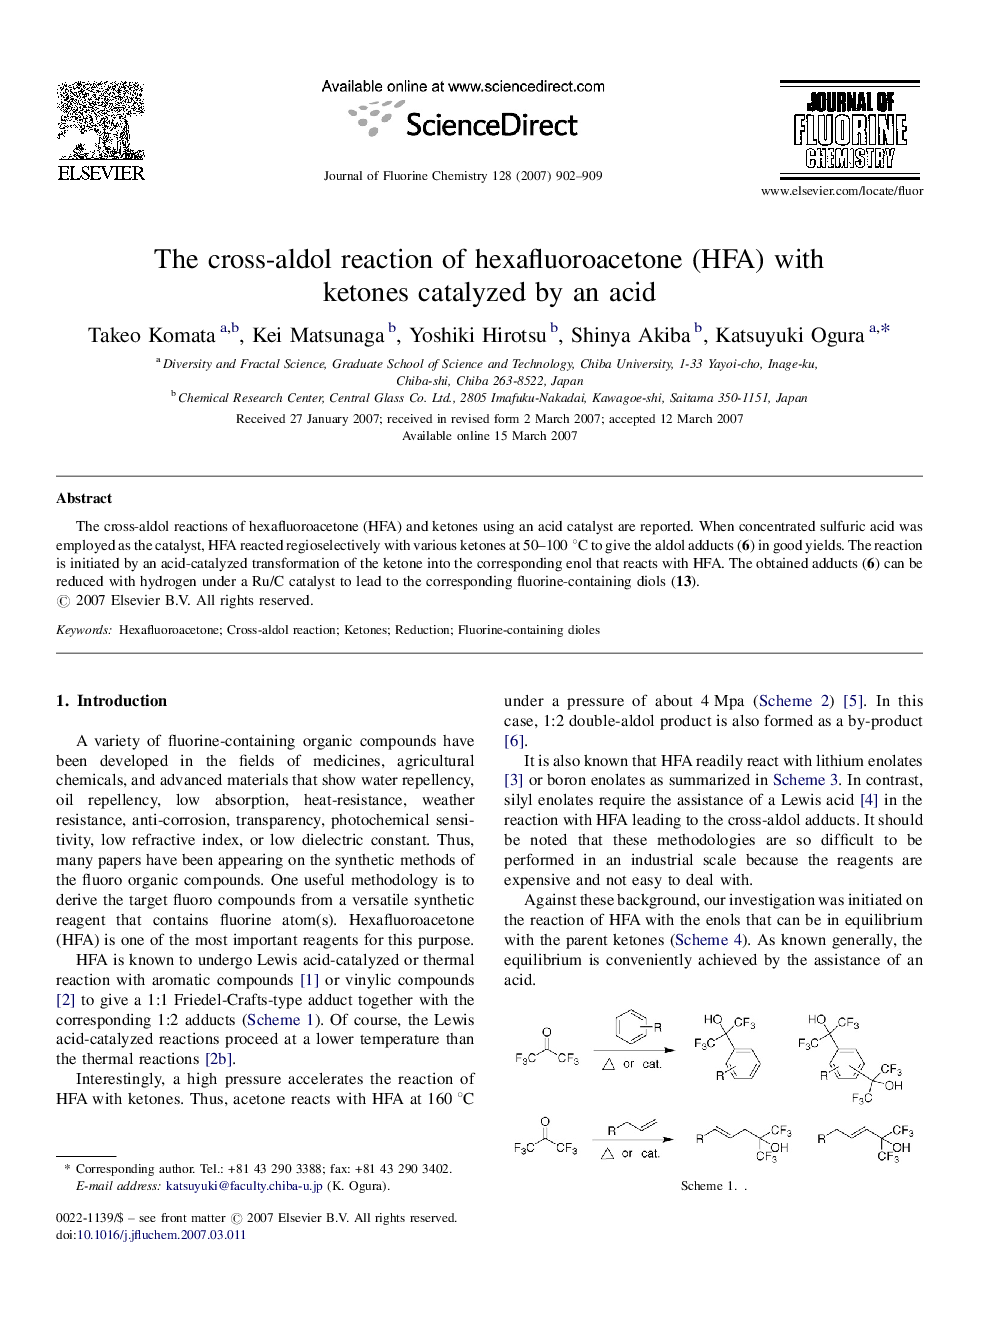 The cross-aldol reaction of hexafluoroacetone (HFA) with ketones catalyzed by an acid